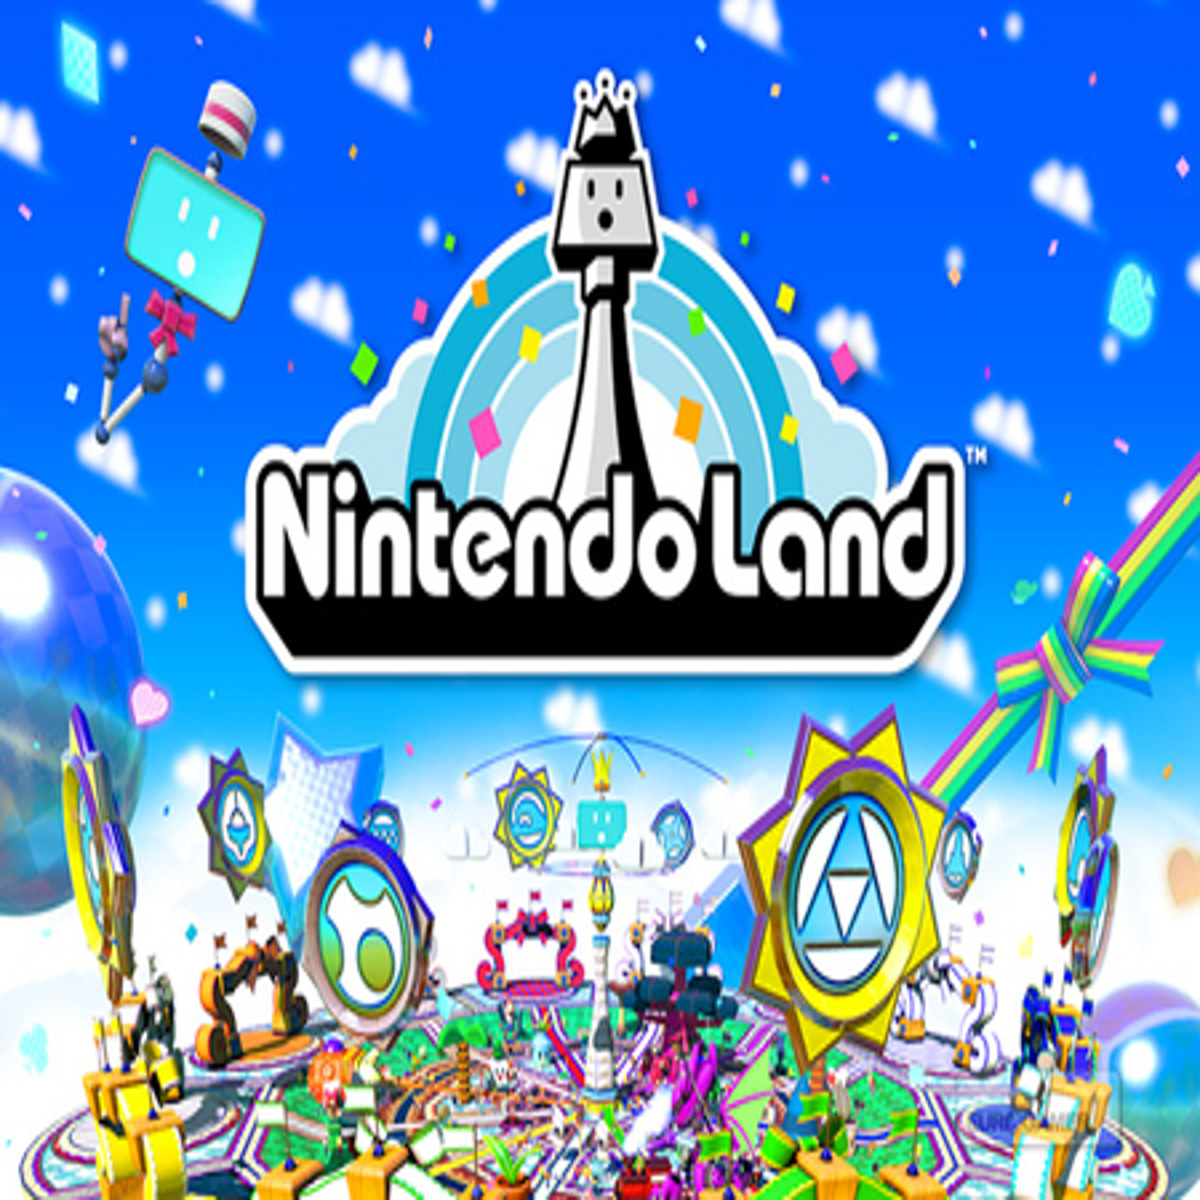 New Wii U Bundle Includes Mario And Luigi Pack-In, Not Nintendo Land